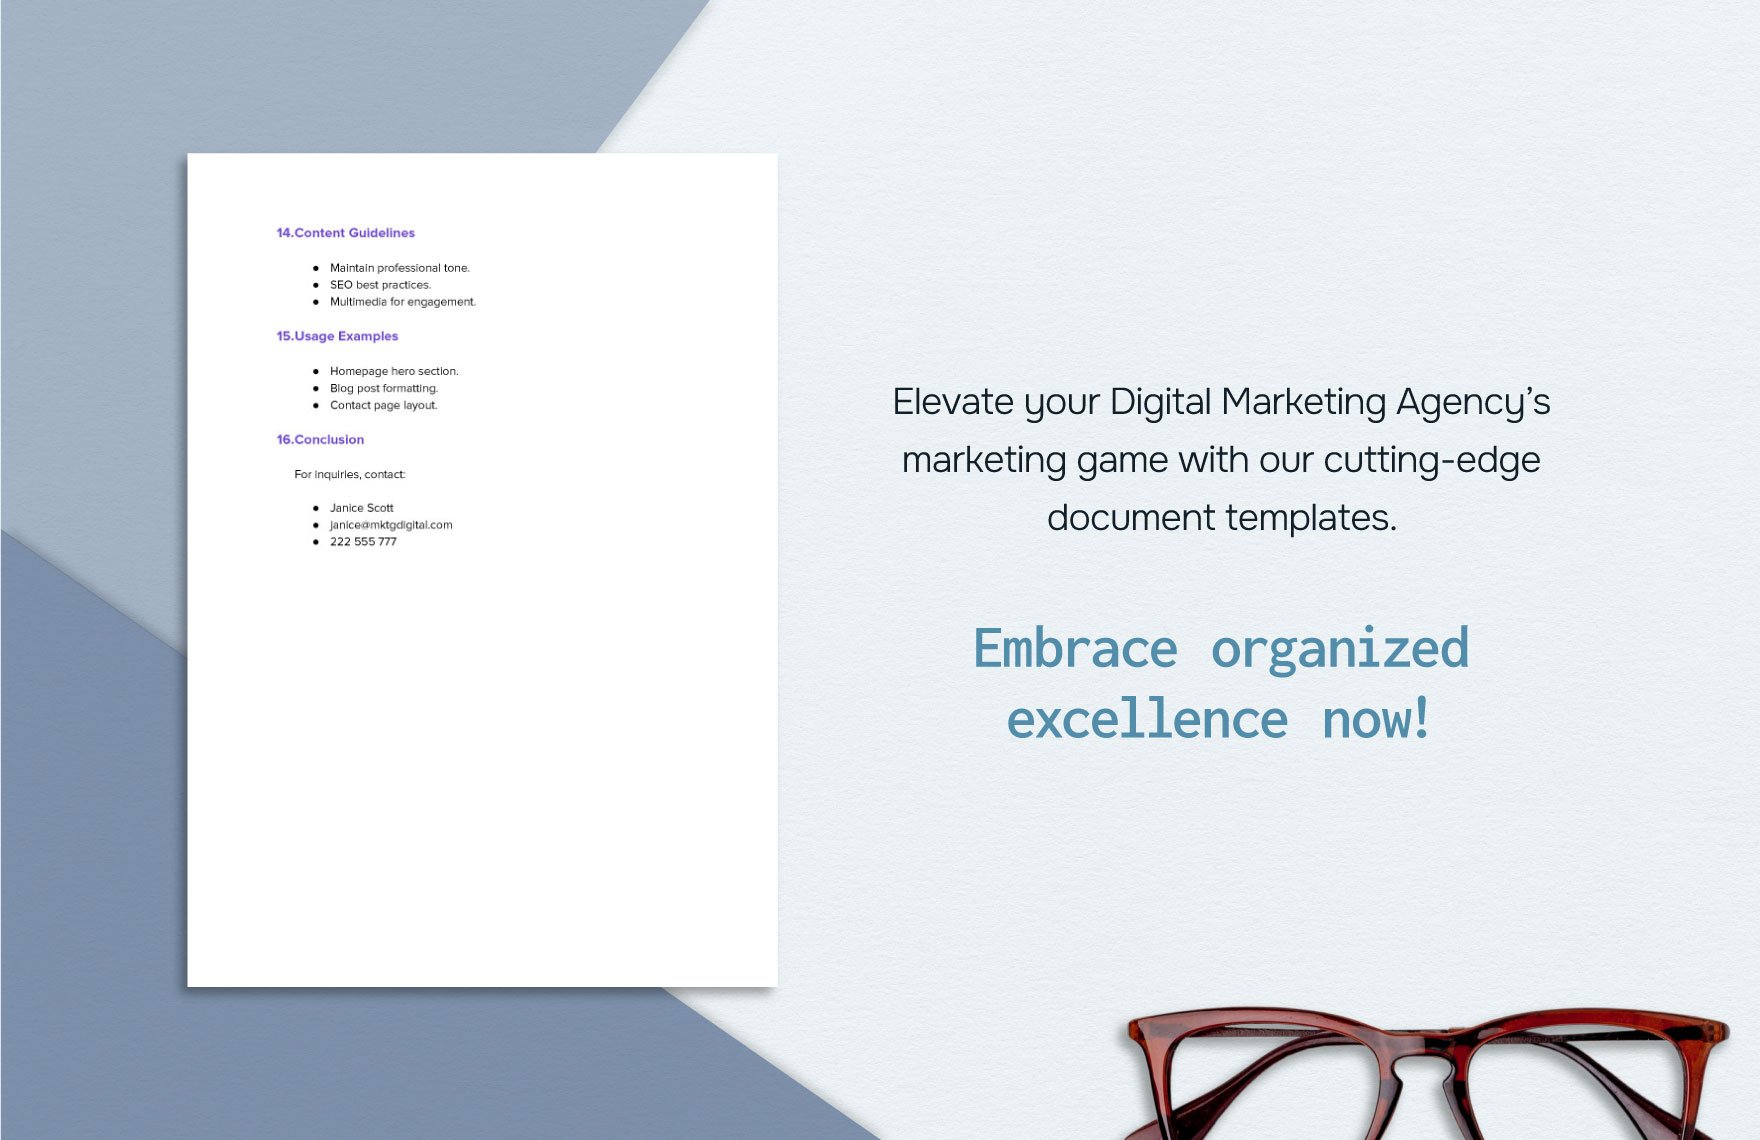 Digital Marketing Agency Web Design Style Guide Template